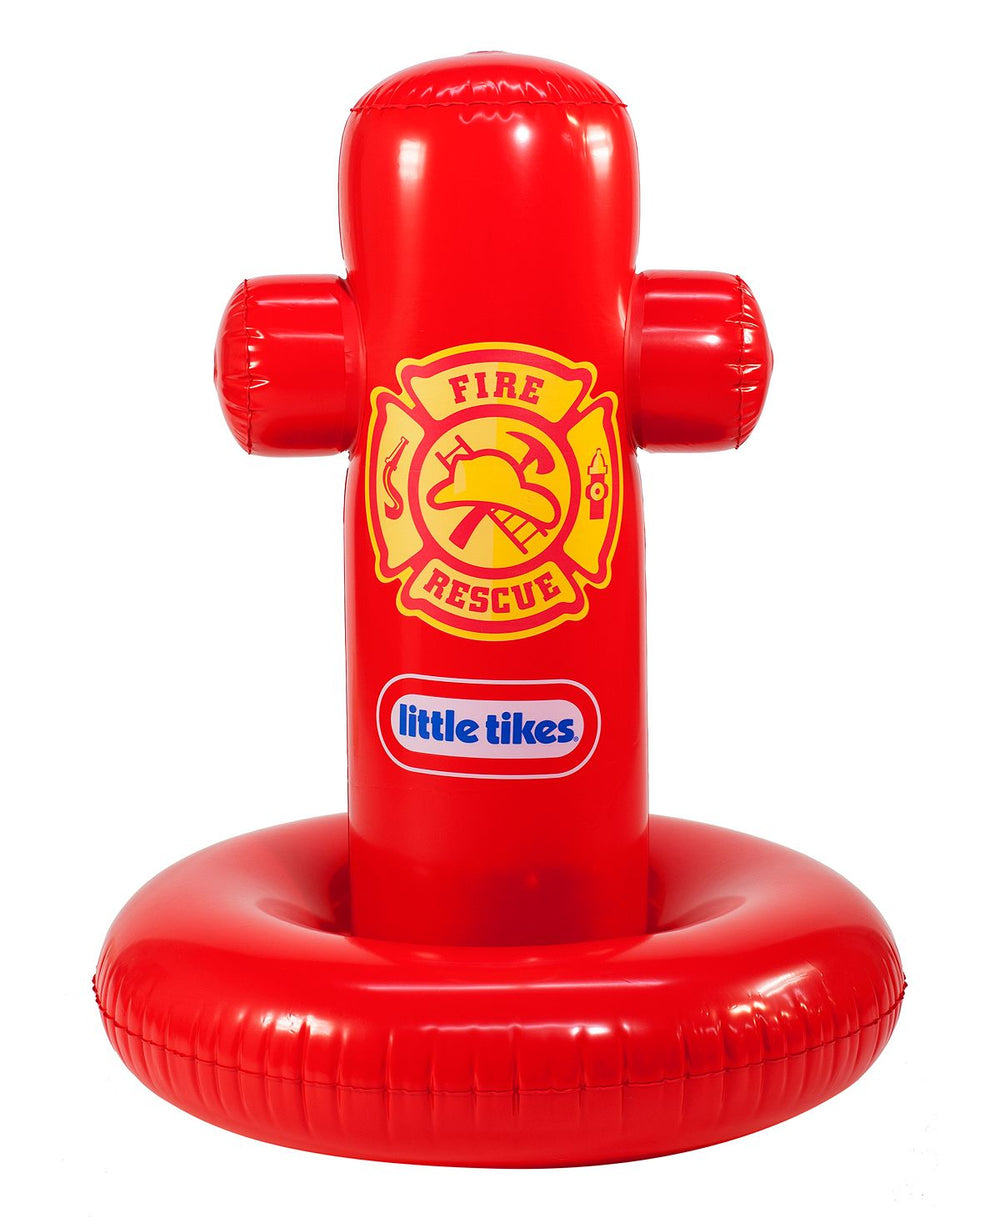 Little Tikes Giant Fire Hydrant Water Sprinkler for Kids